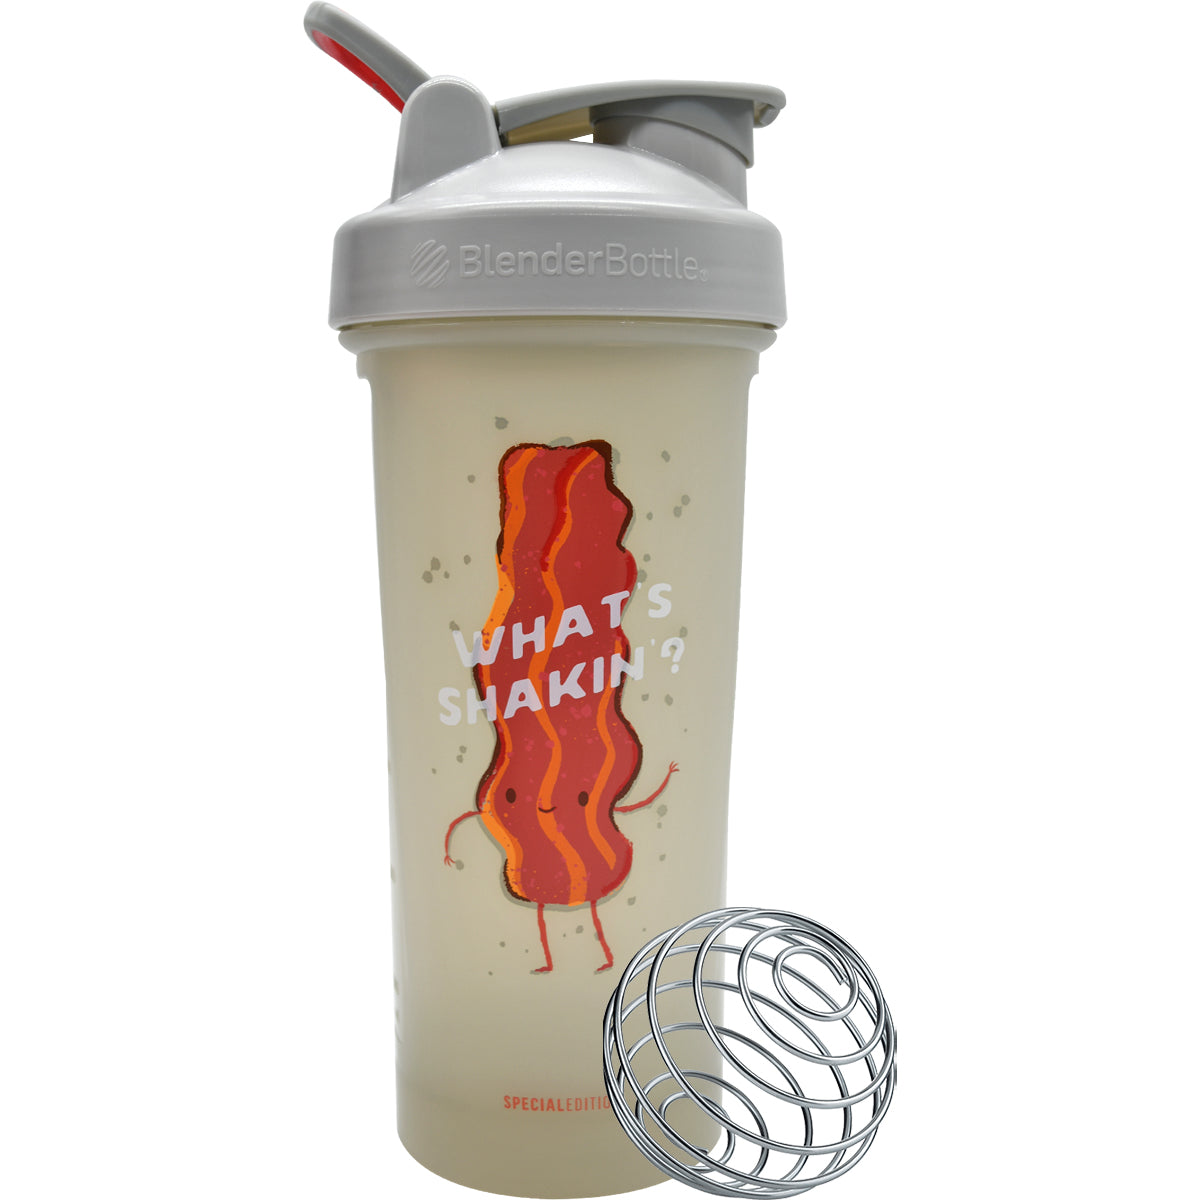 Blender Bottle Foodie Special Edition 28 oz. Shaker Mixer Cup with Loop Top Blender Bottle